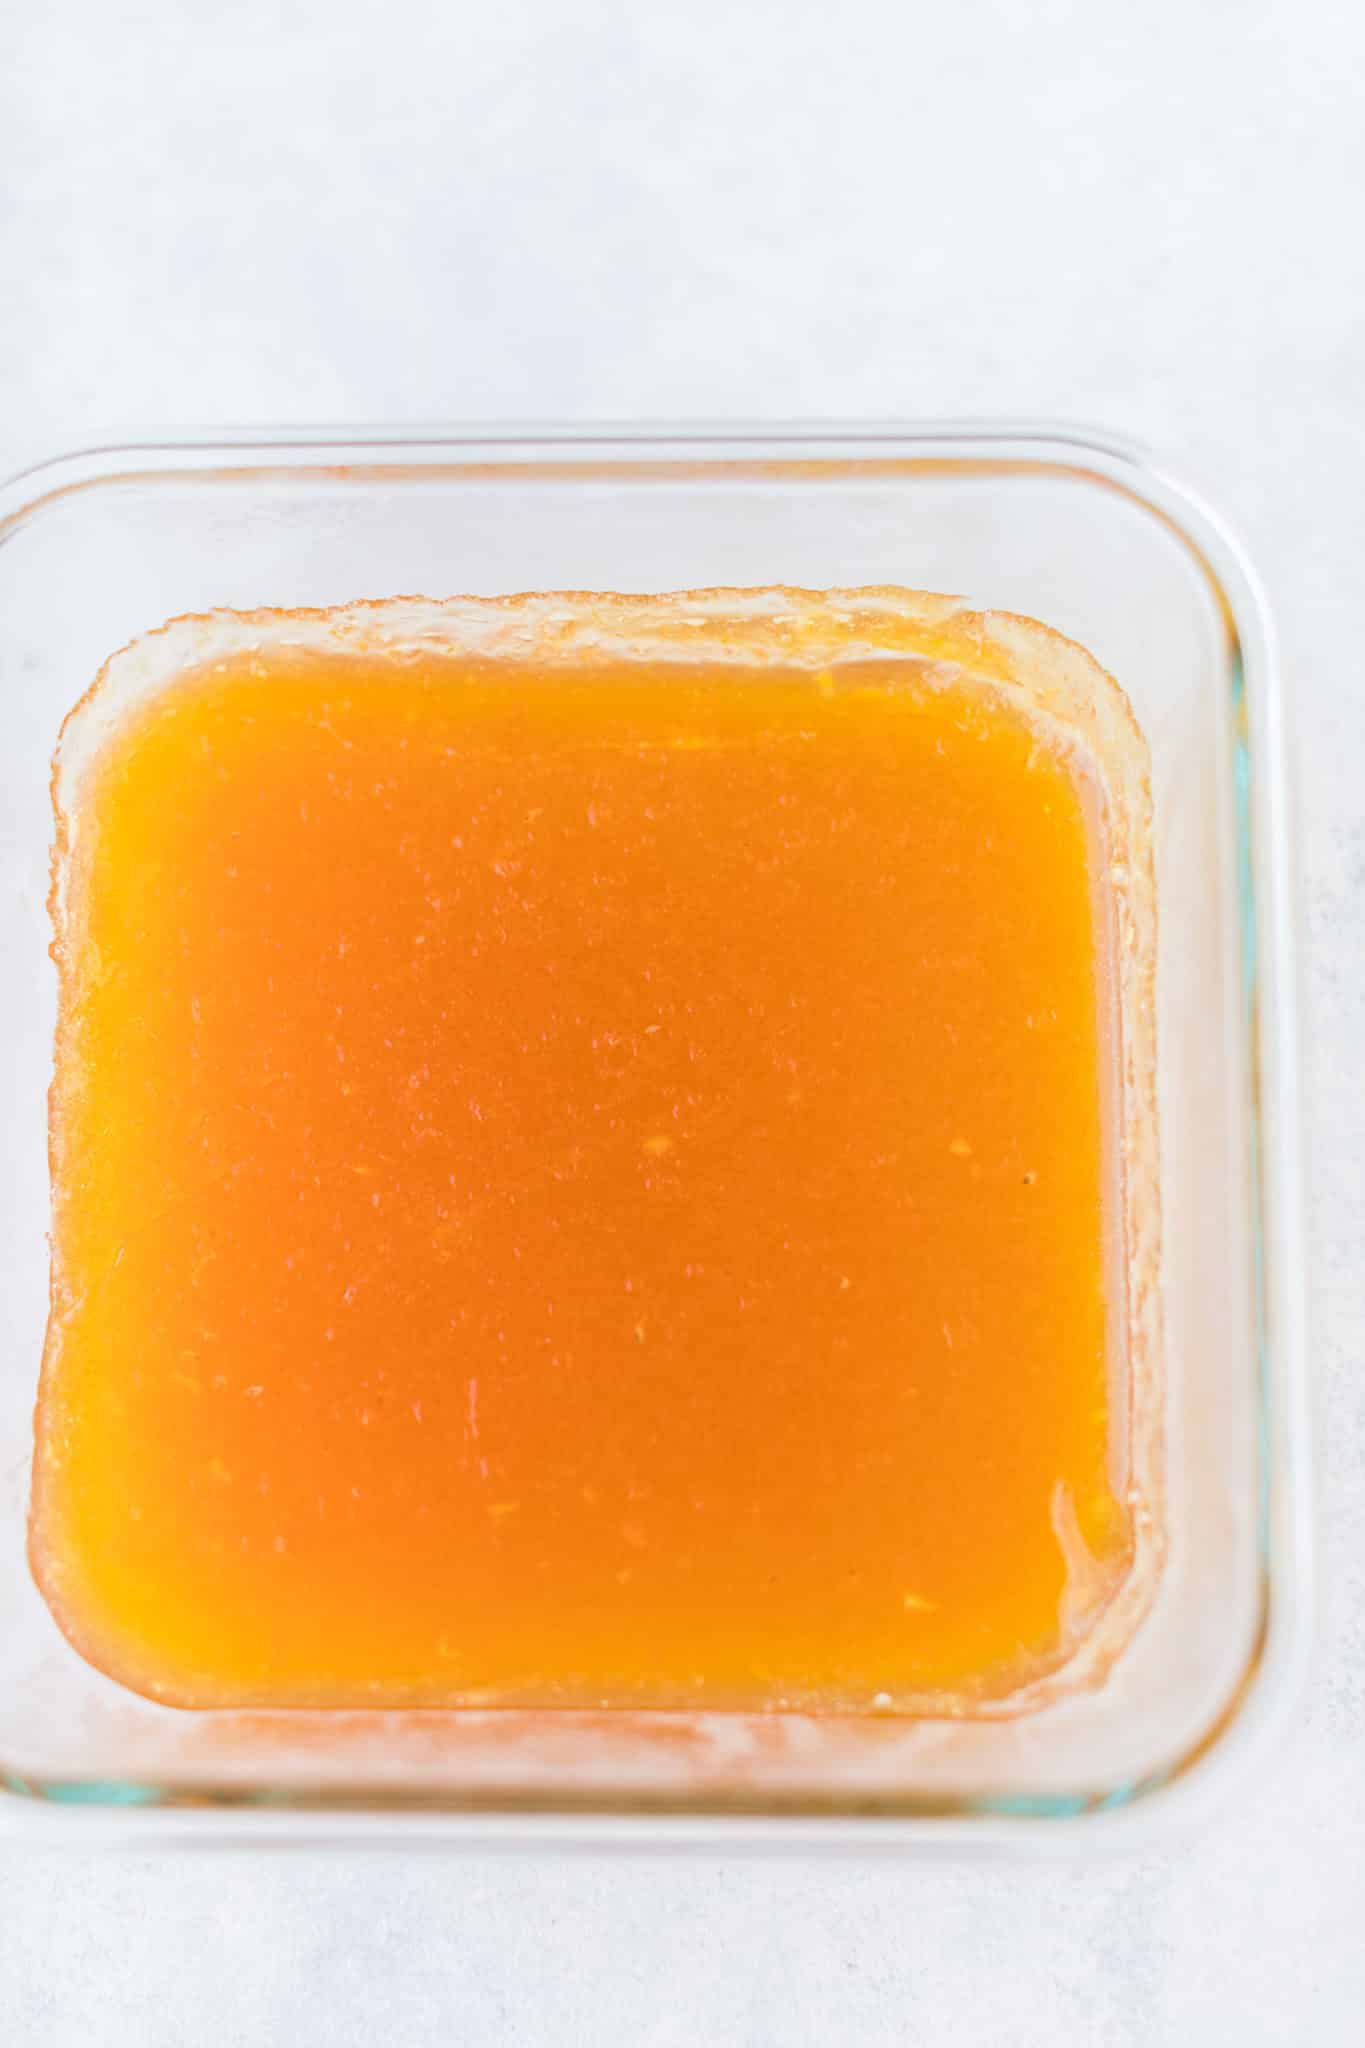 homemade orange jello in a baking dish to set.